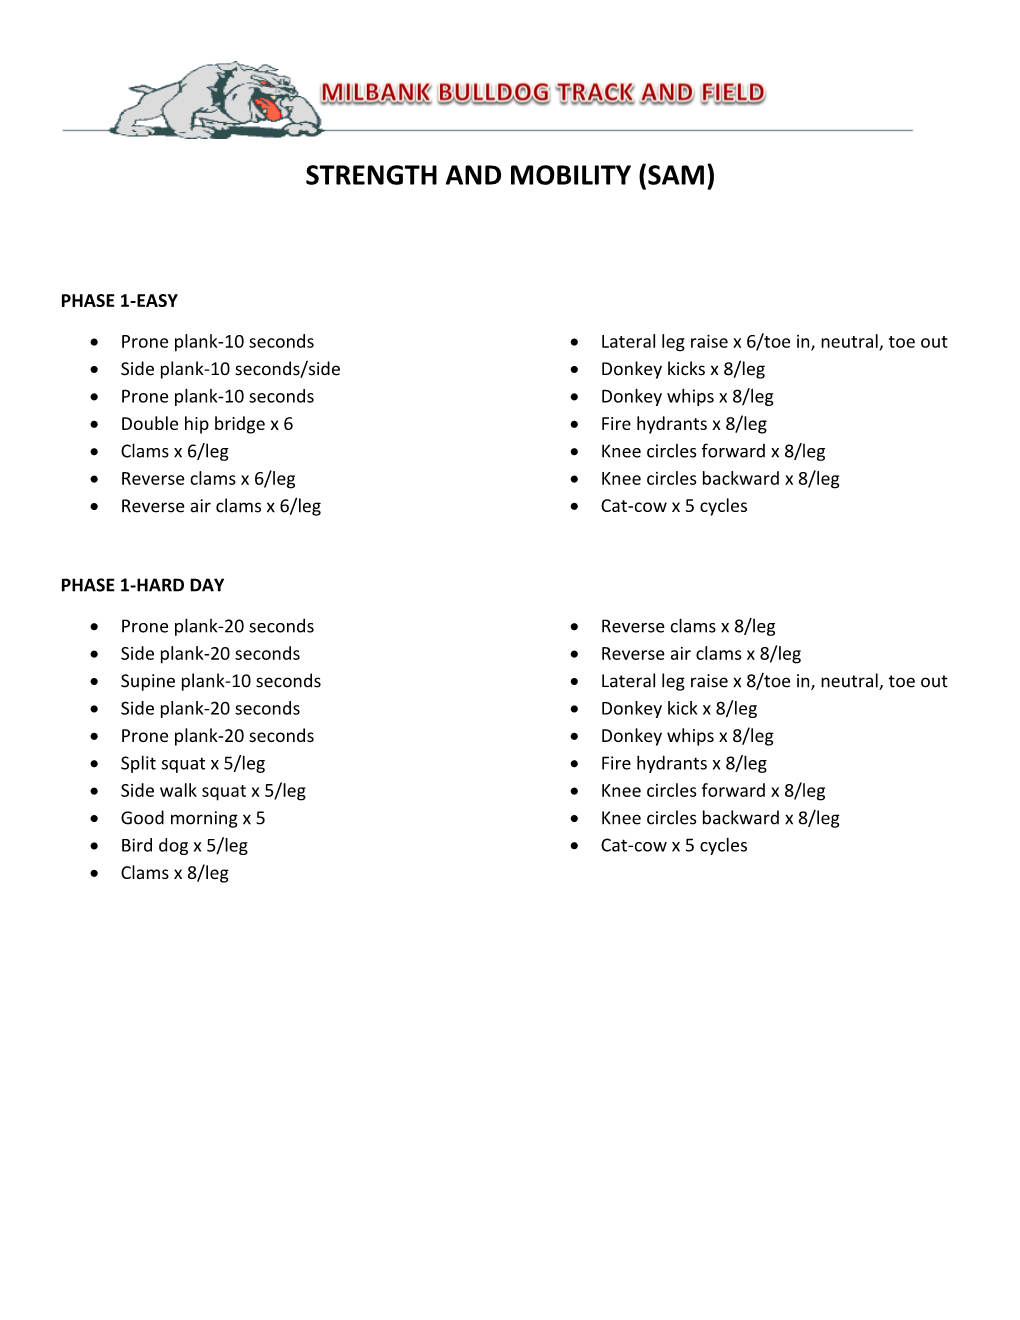 Strength and Mobility (Sam)